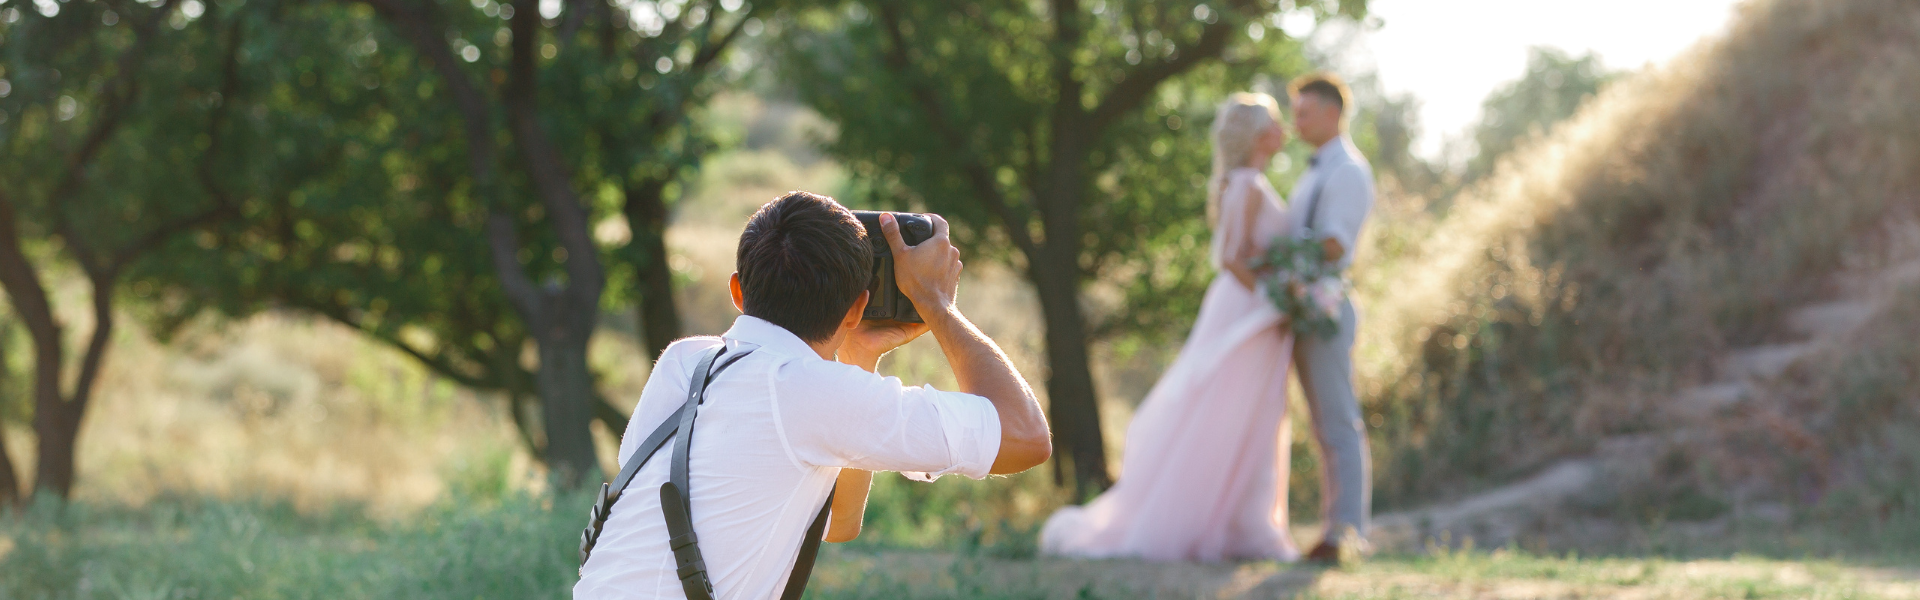 Photographer Listing Category Dreambox Wedding Photography & Videography Wedding Photography & Videography